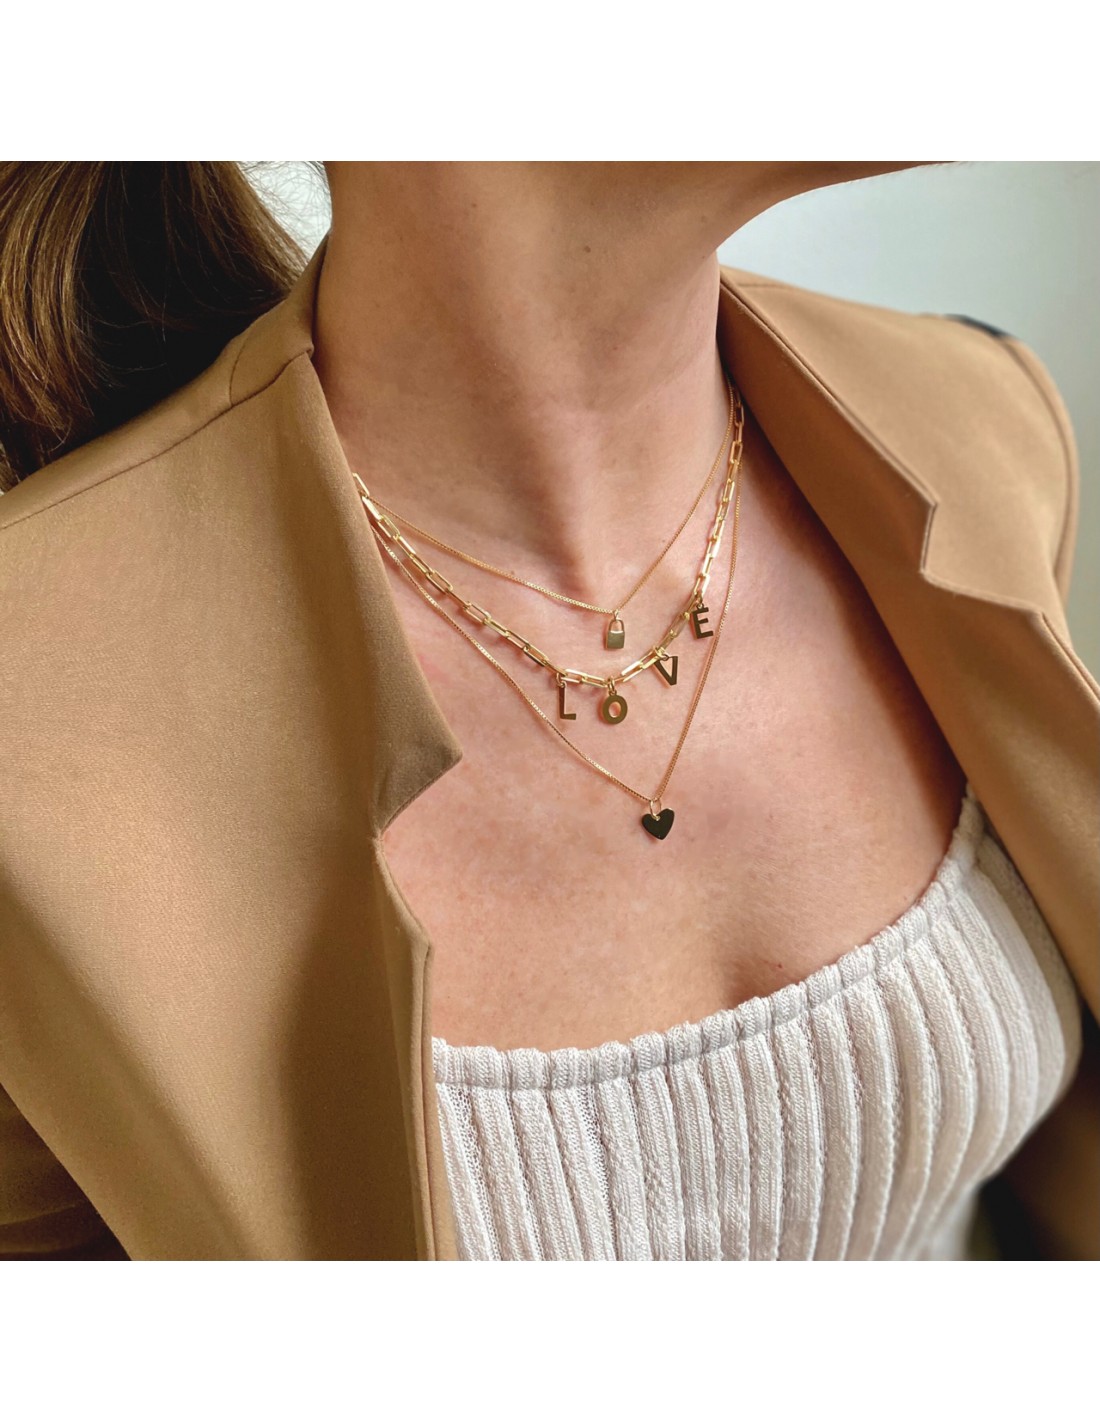 Cartier Necklace | Cartier Necklace in 